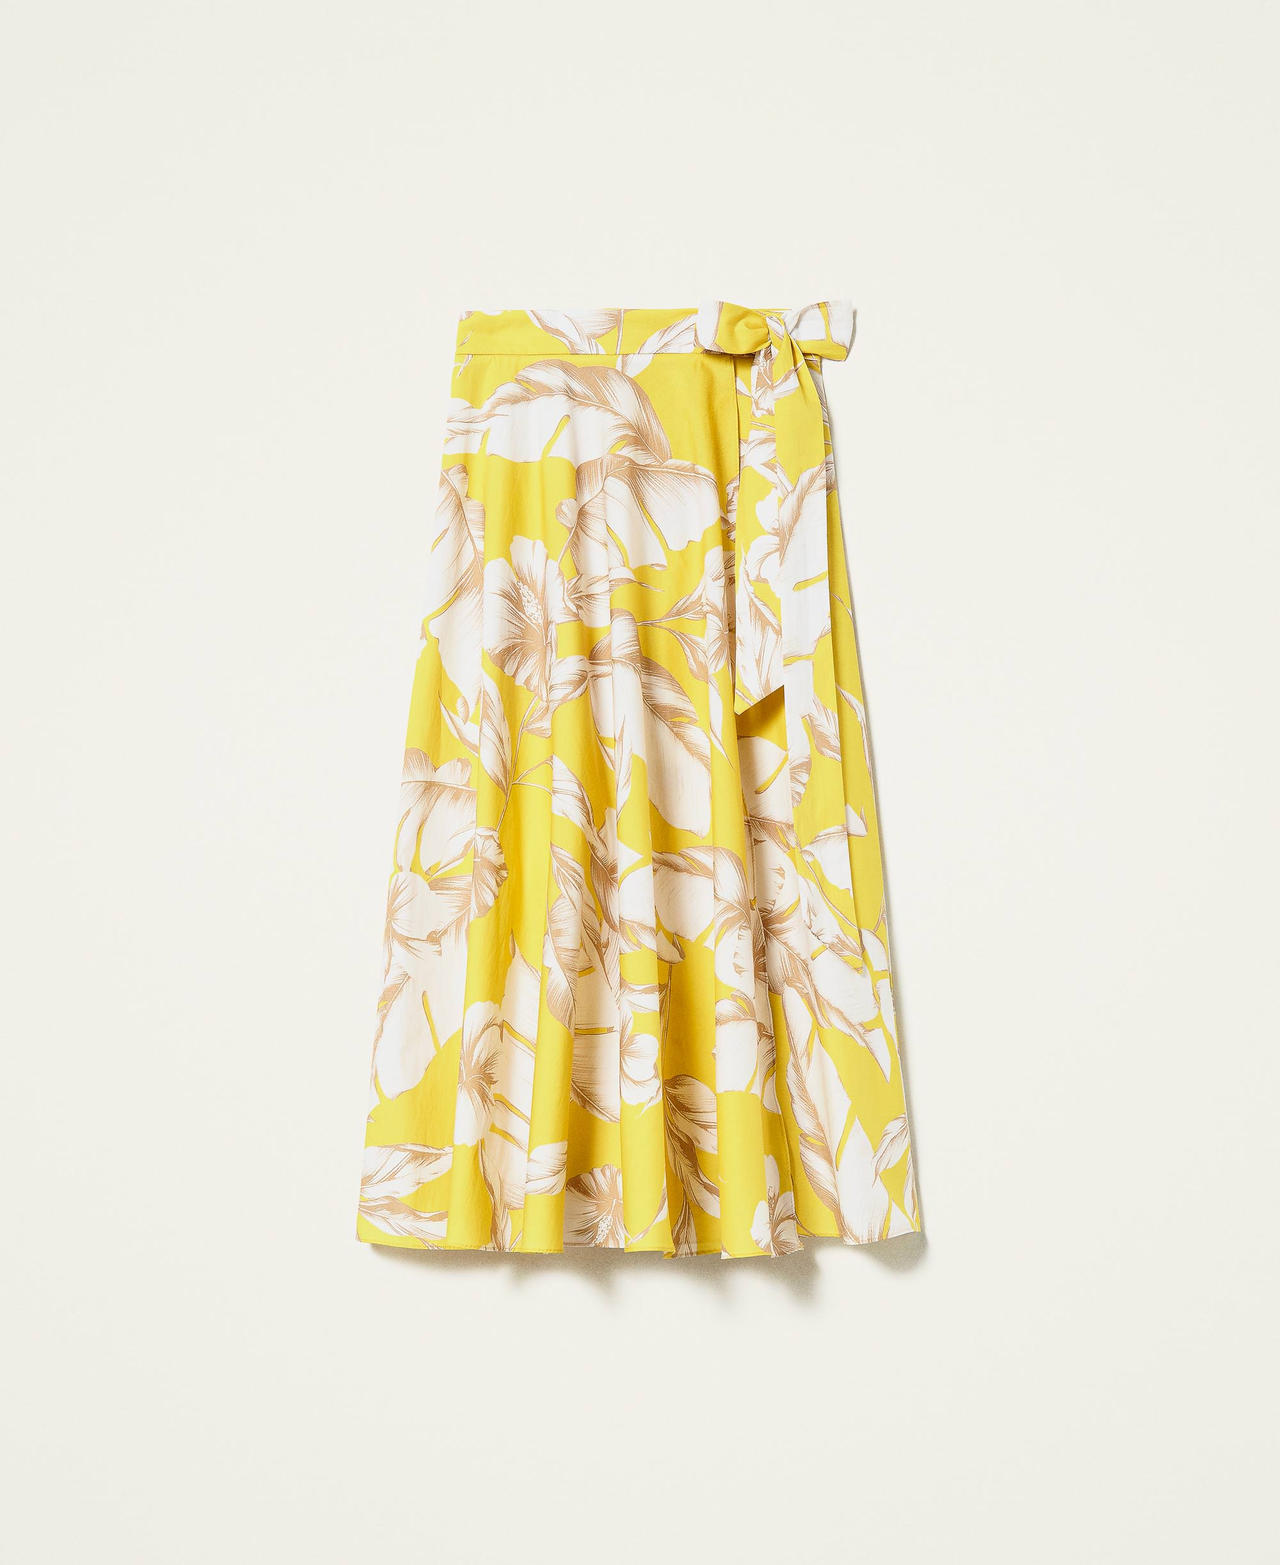 Jupe portefeuille en popeline florale Imprimé Hibiscus Jaune/Blanc « Neige » Femme 221TT2316-0S